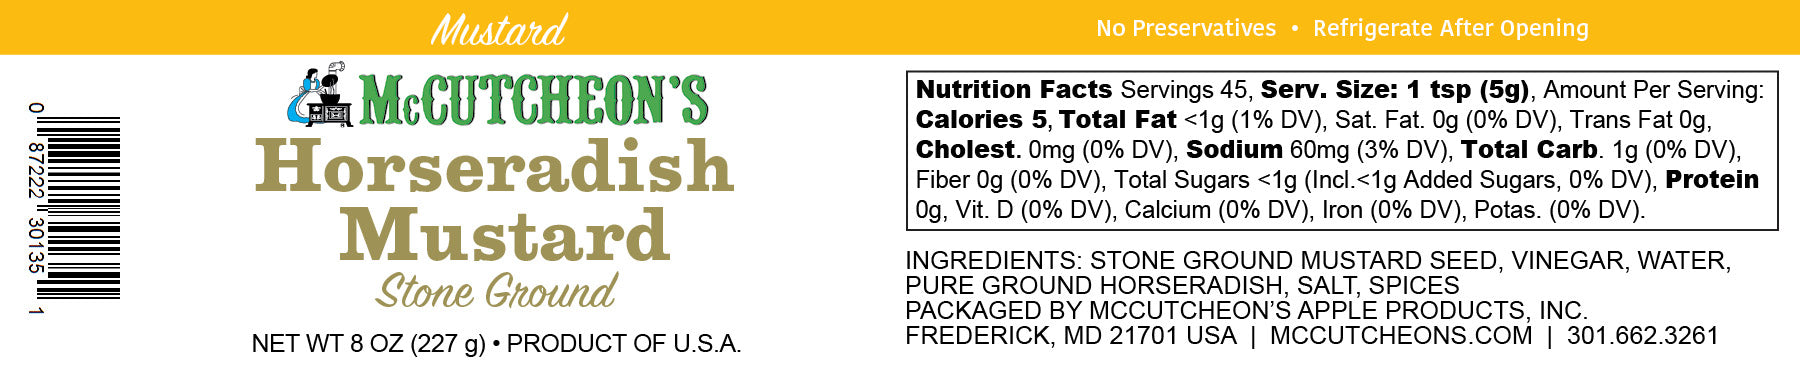 nutritional label for McCutcheon's mini stone ground horseradish mustard